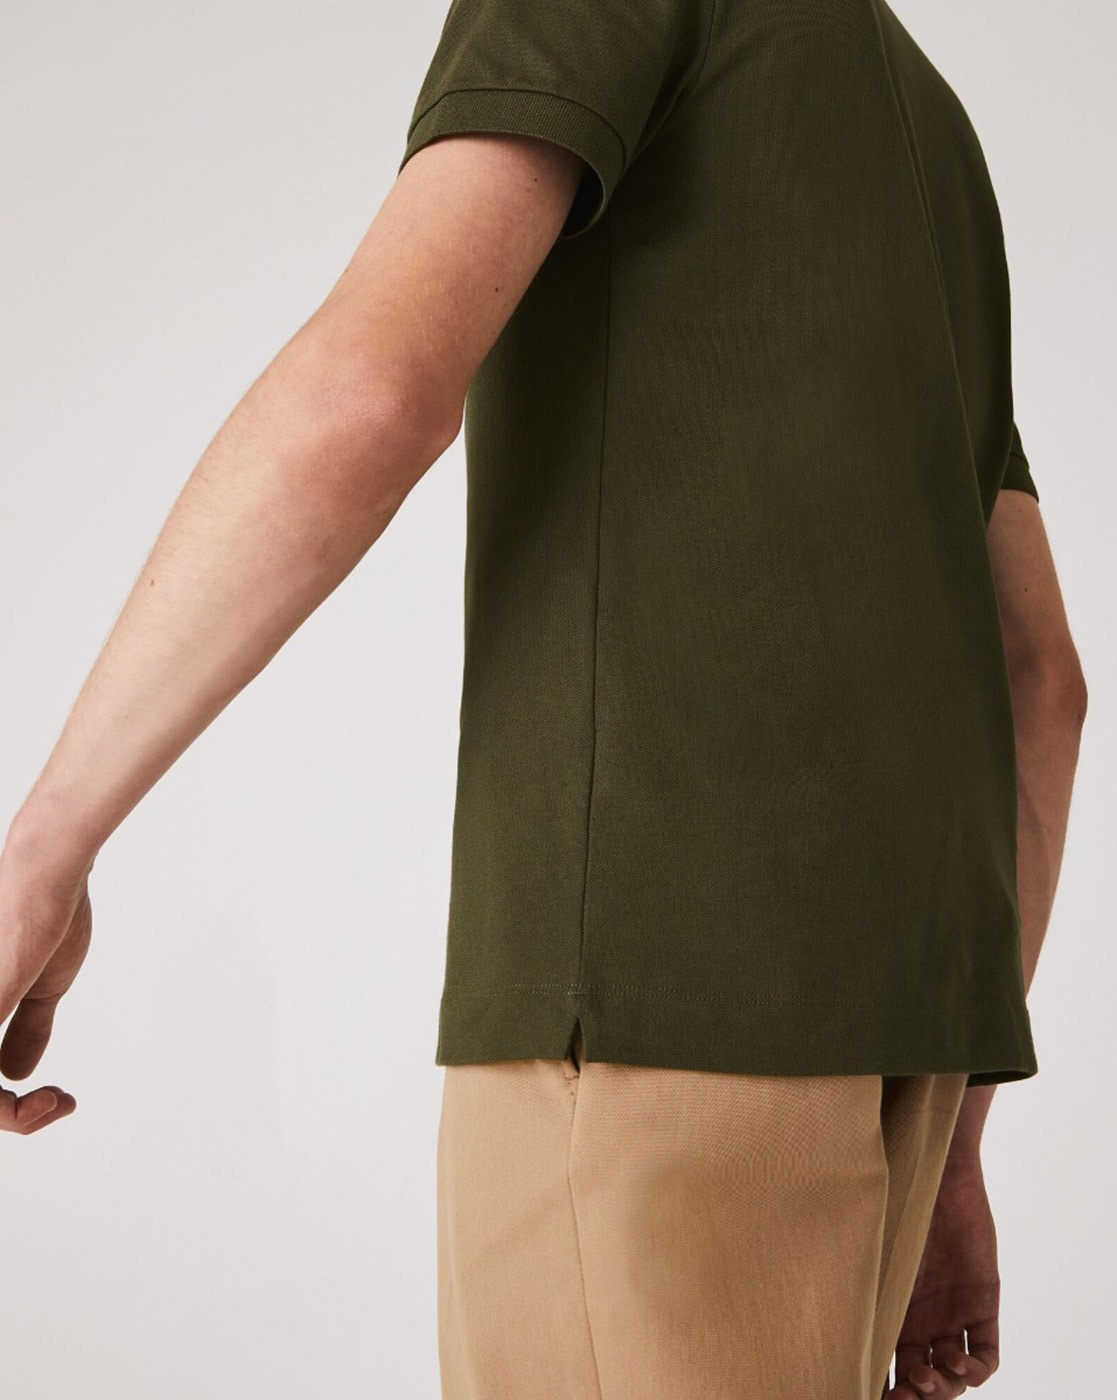 Lacoste Contemporary Collection's Men's Short Sleeve Graphic Caviar Polo  Shirt, Green/Tarragon-Flour, XX-Large at  Men's Clothing store